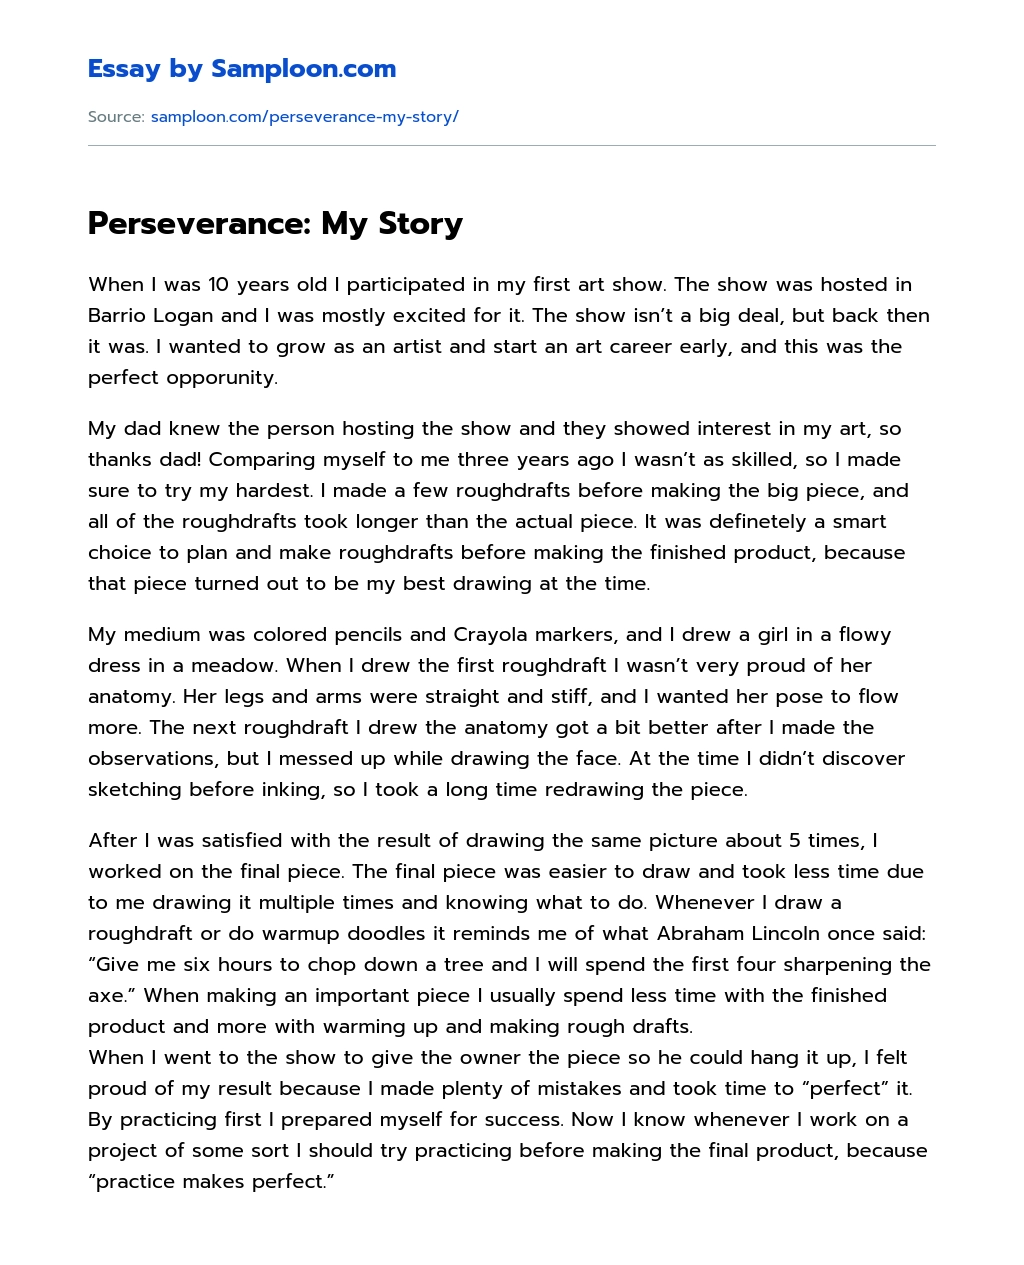 Perseverance: My Story essay